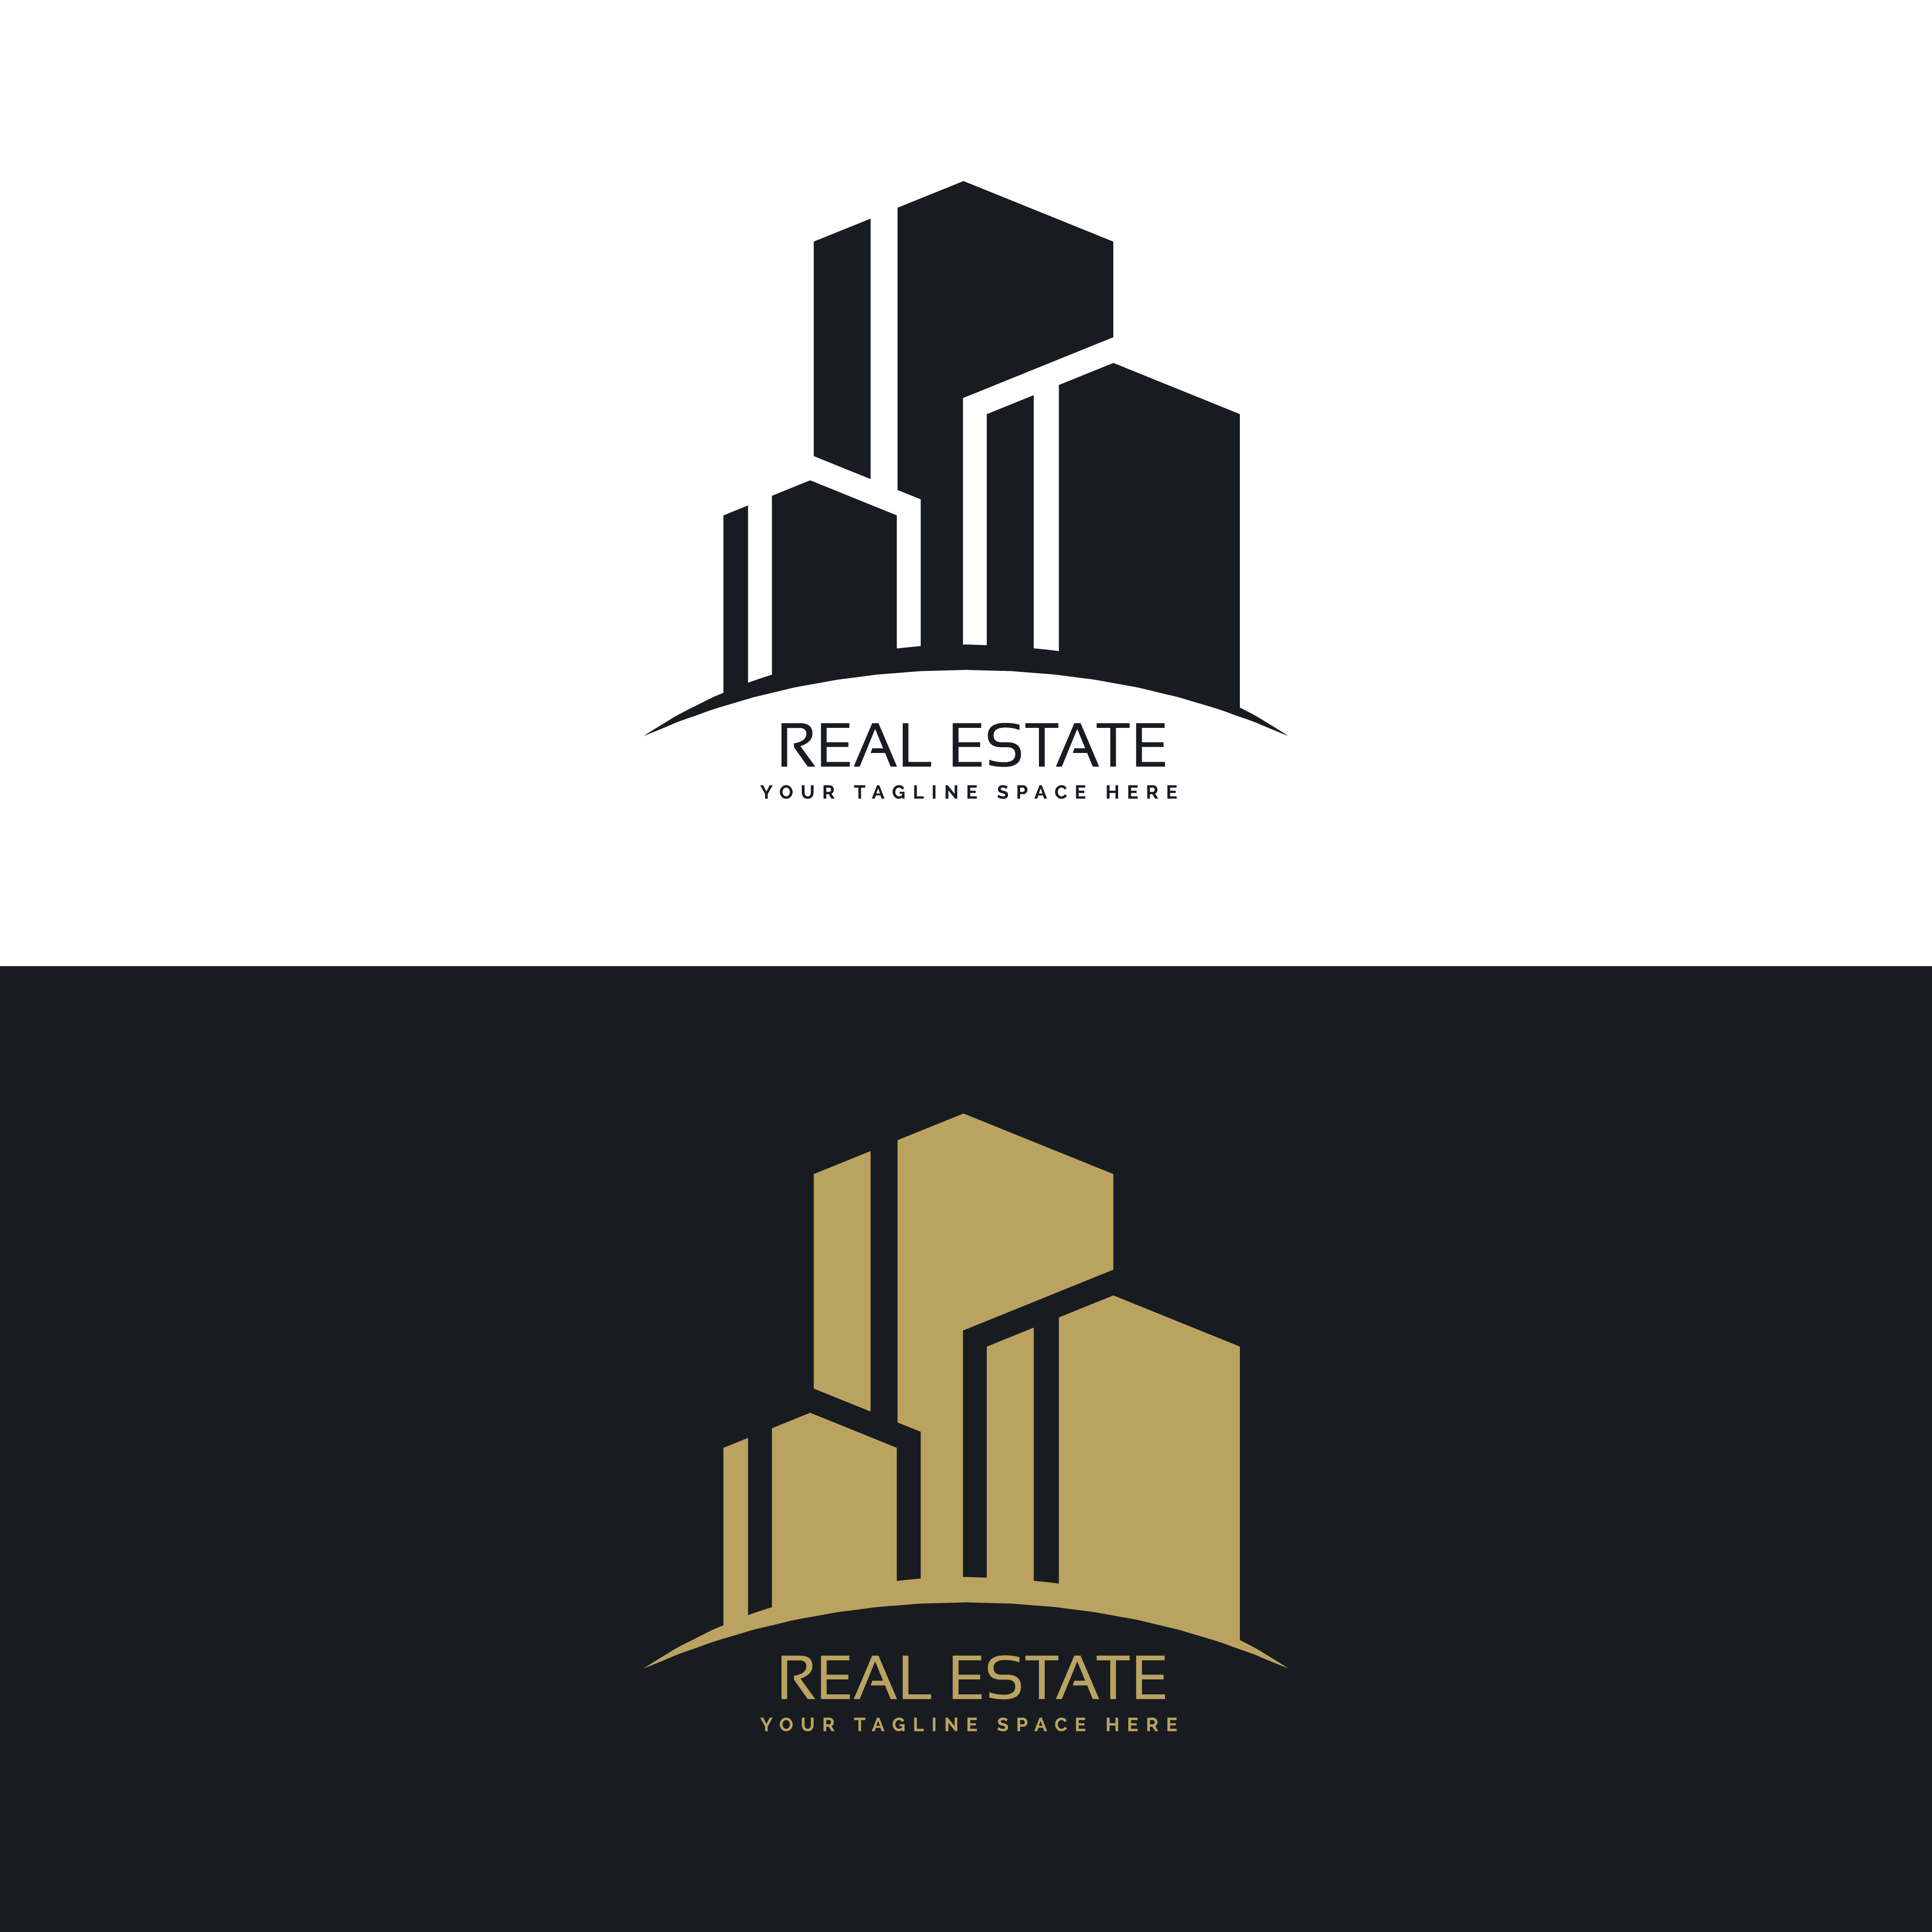 real estate logo design concept design - Download Free Vector Art ...